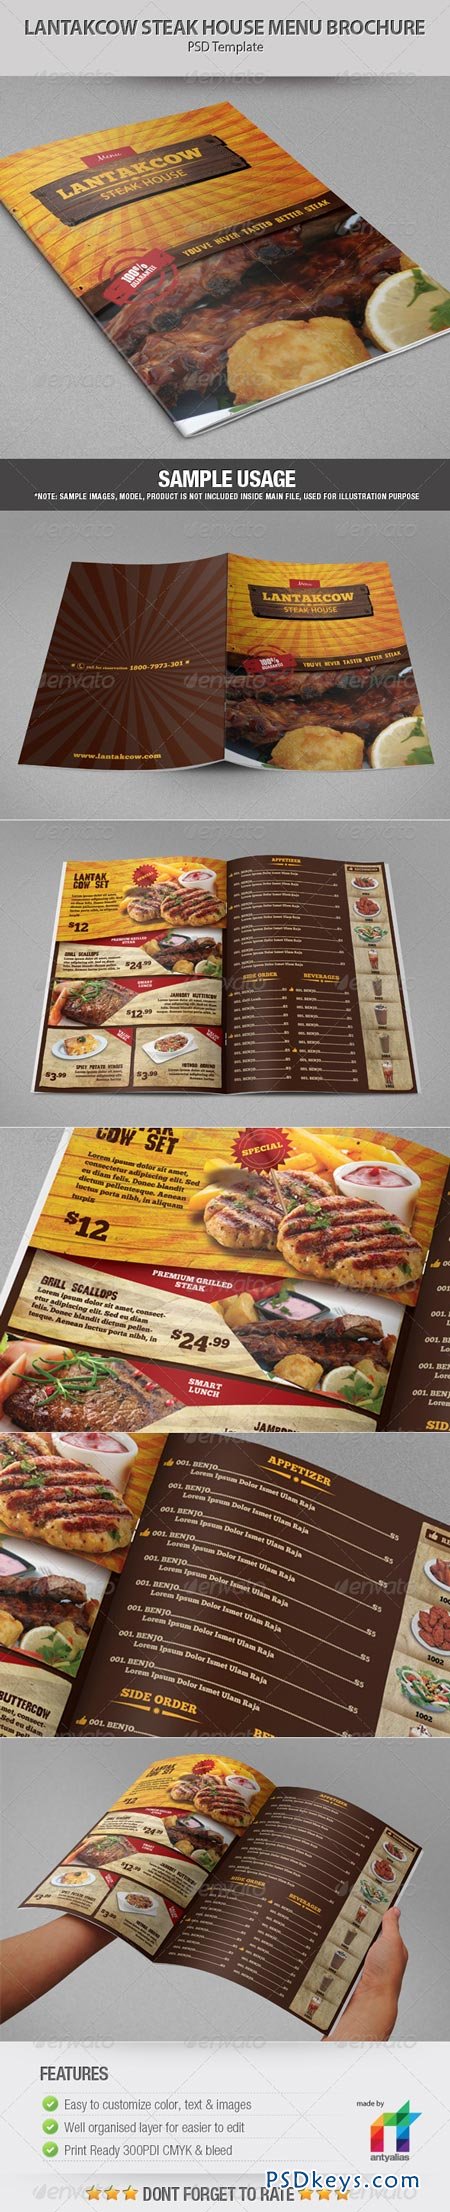 Lantakcow Steak House Menu Brochure 3386596